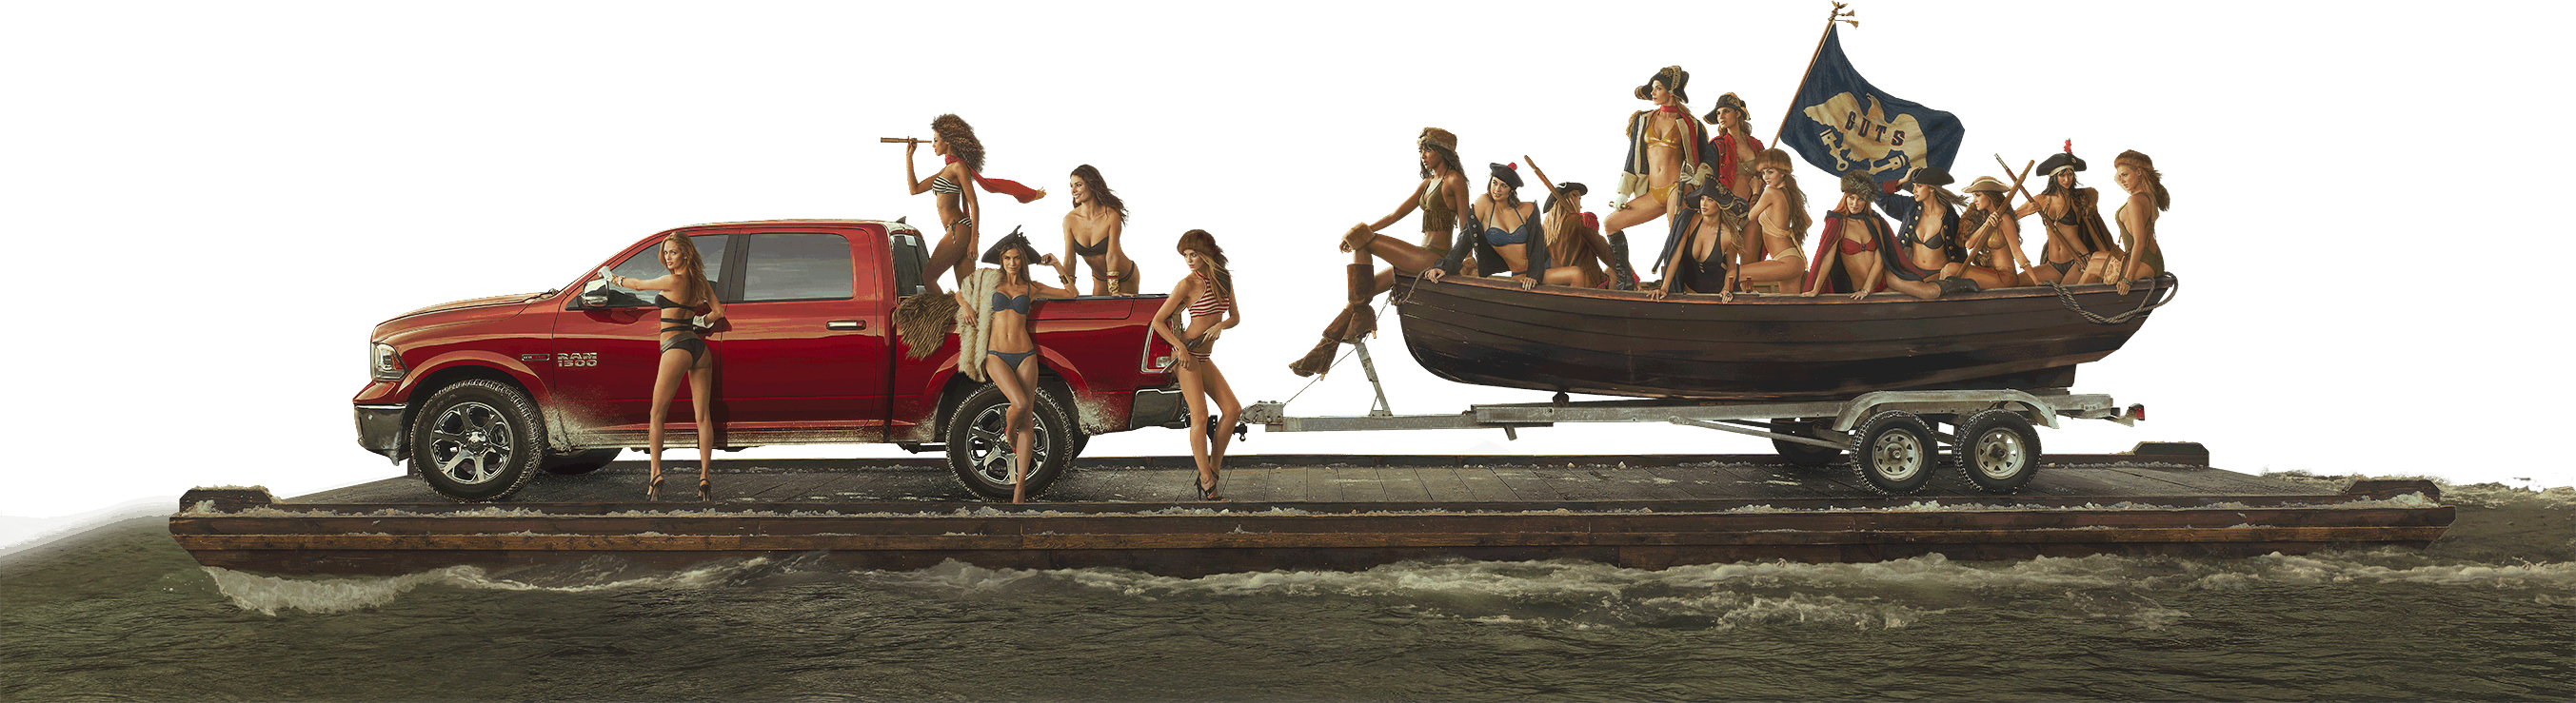 Web Painting - Ram Trucks 2015 Sports Illustrated Swimsuit Girls